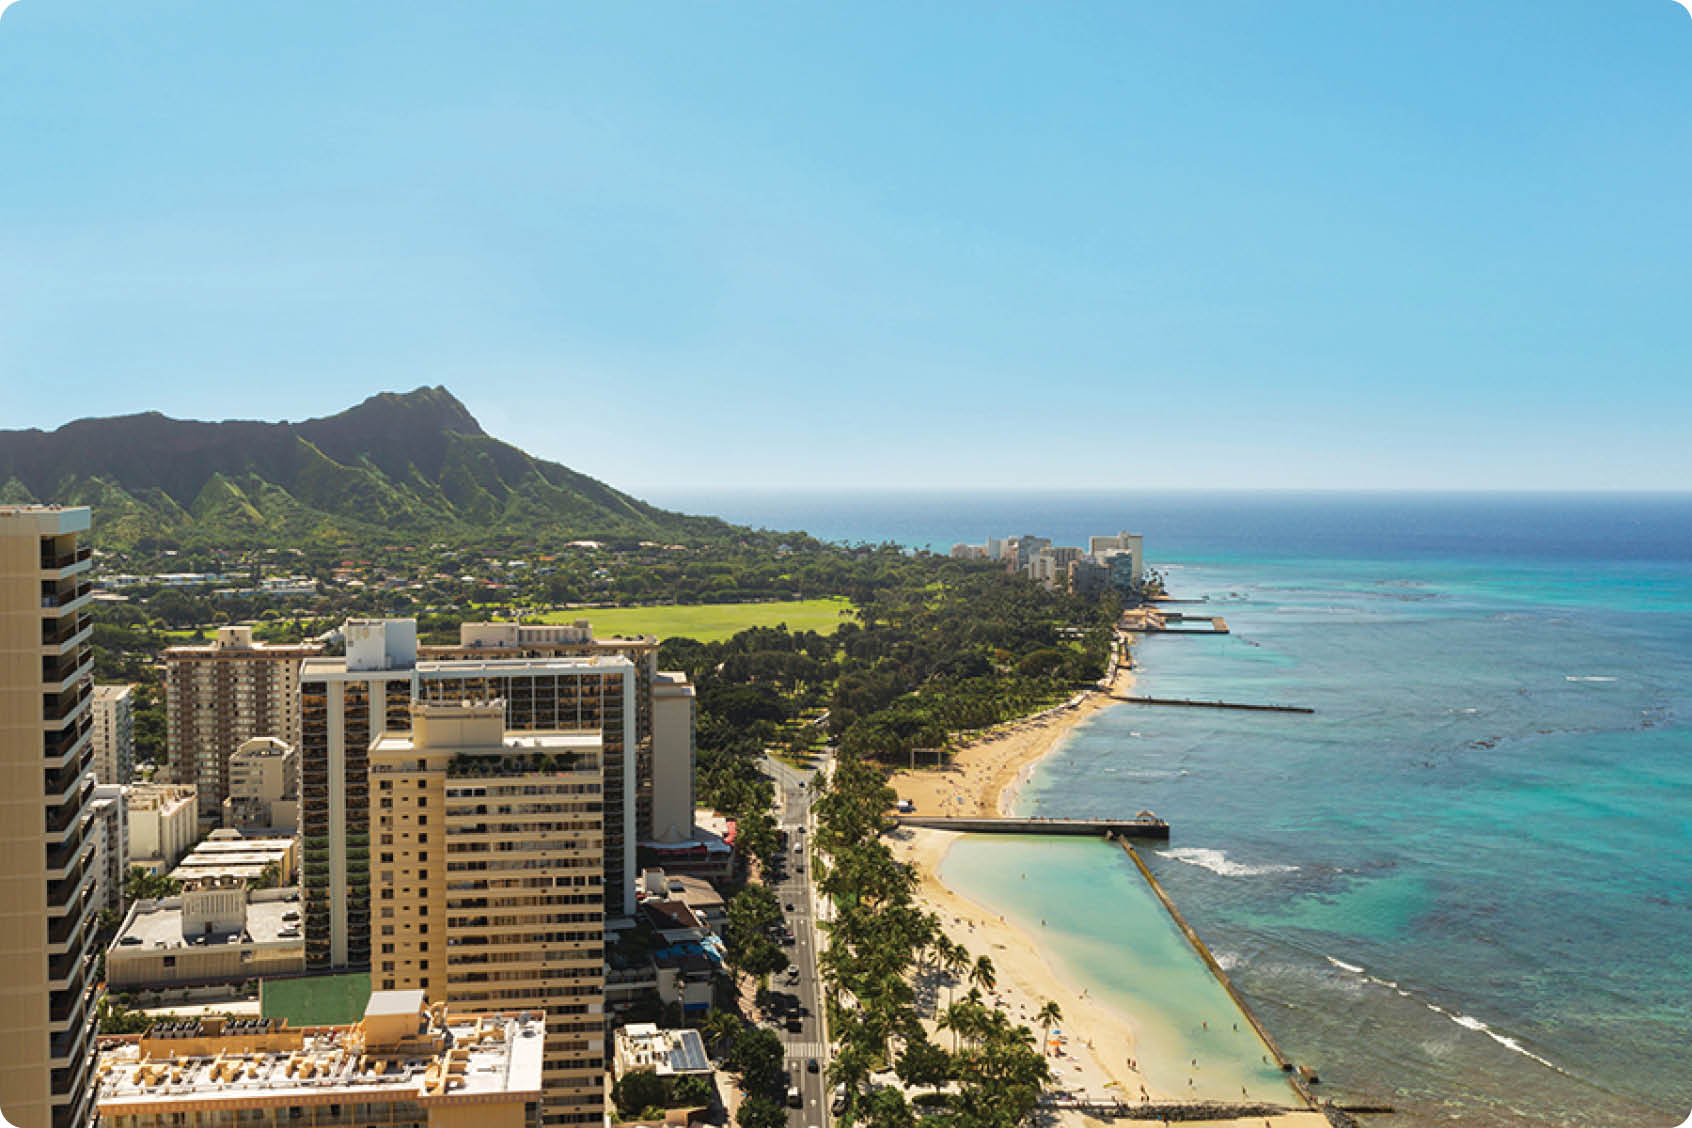 Enveloped in island beauty, Hyatt Regency Waikiki Beach Resort and Spa is your place for aloha 